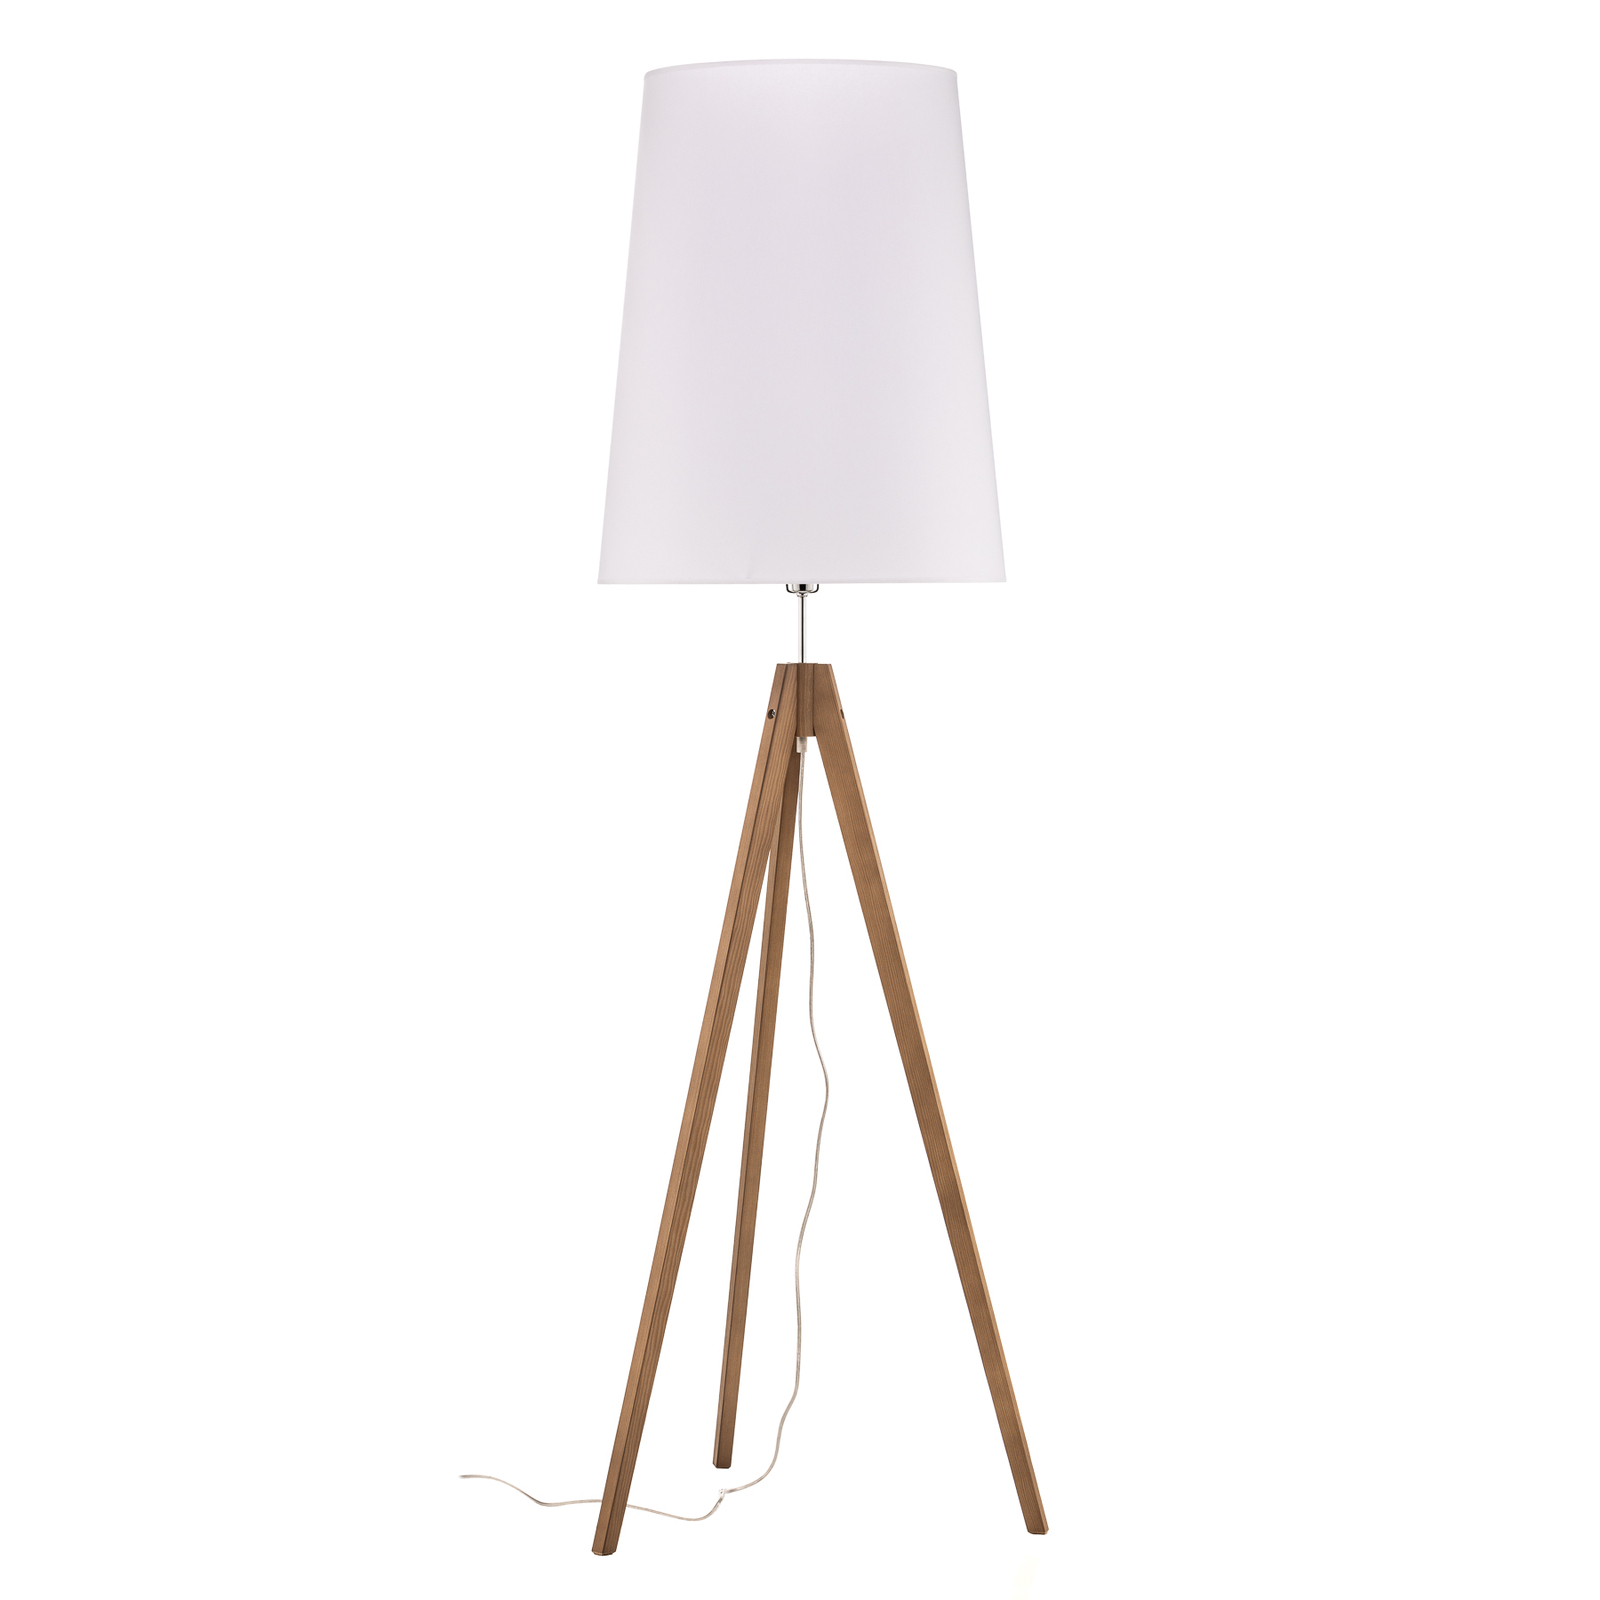 Walz floor lamp, tripod frame, white lampshade